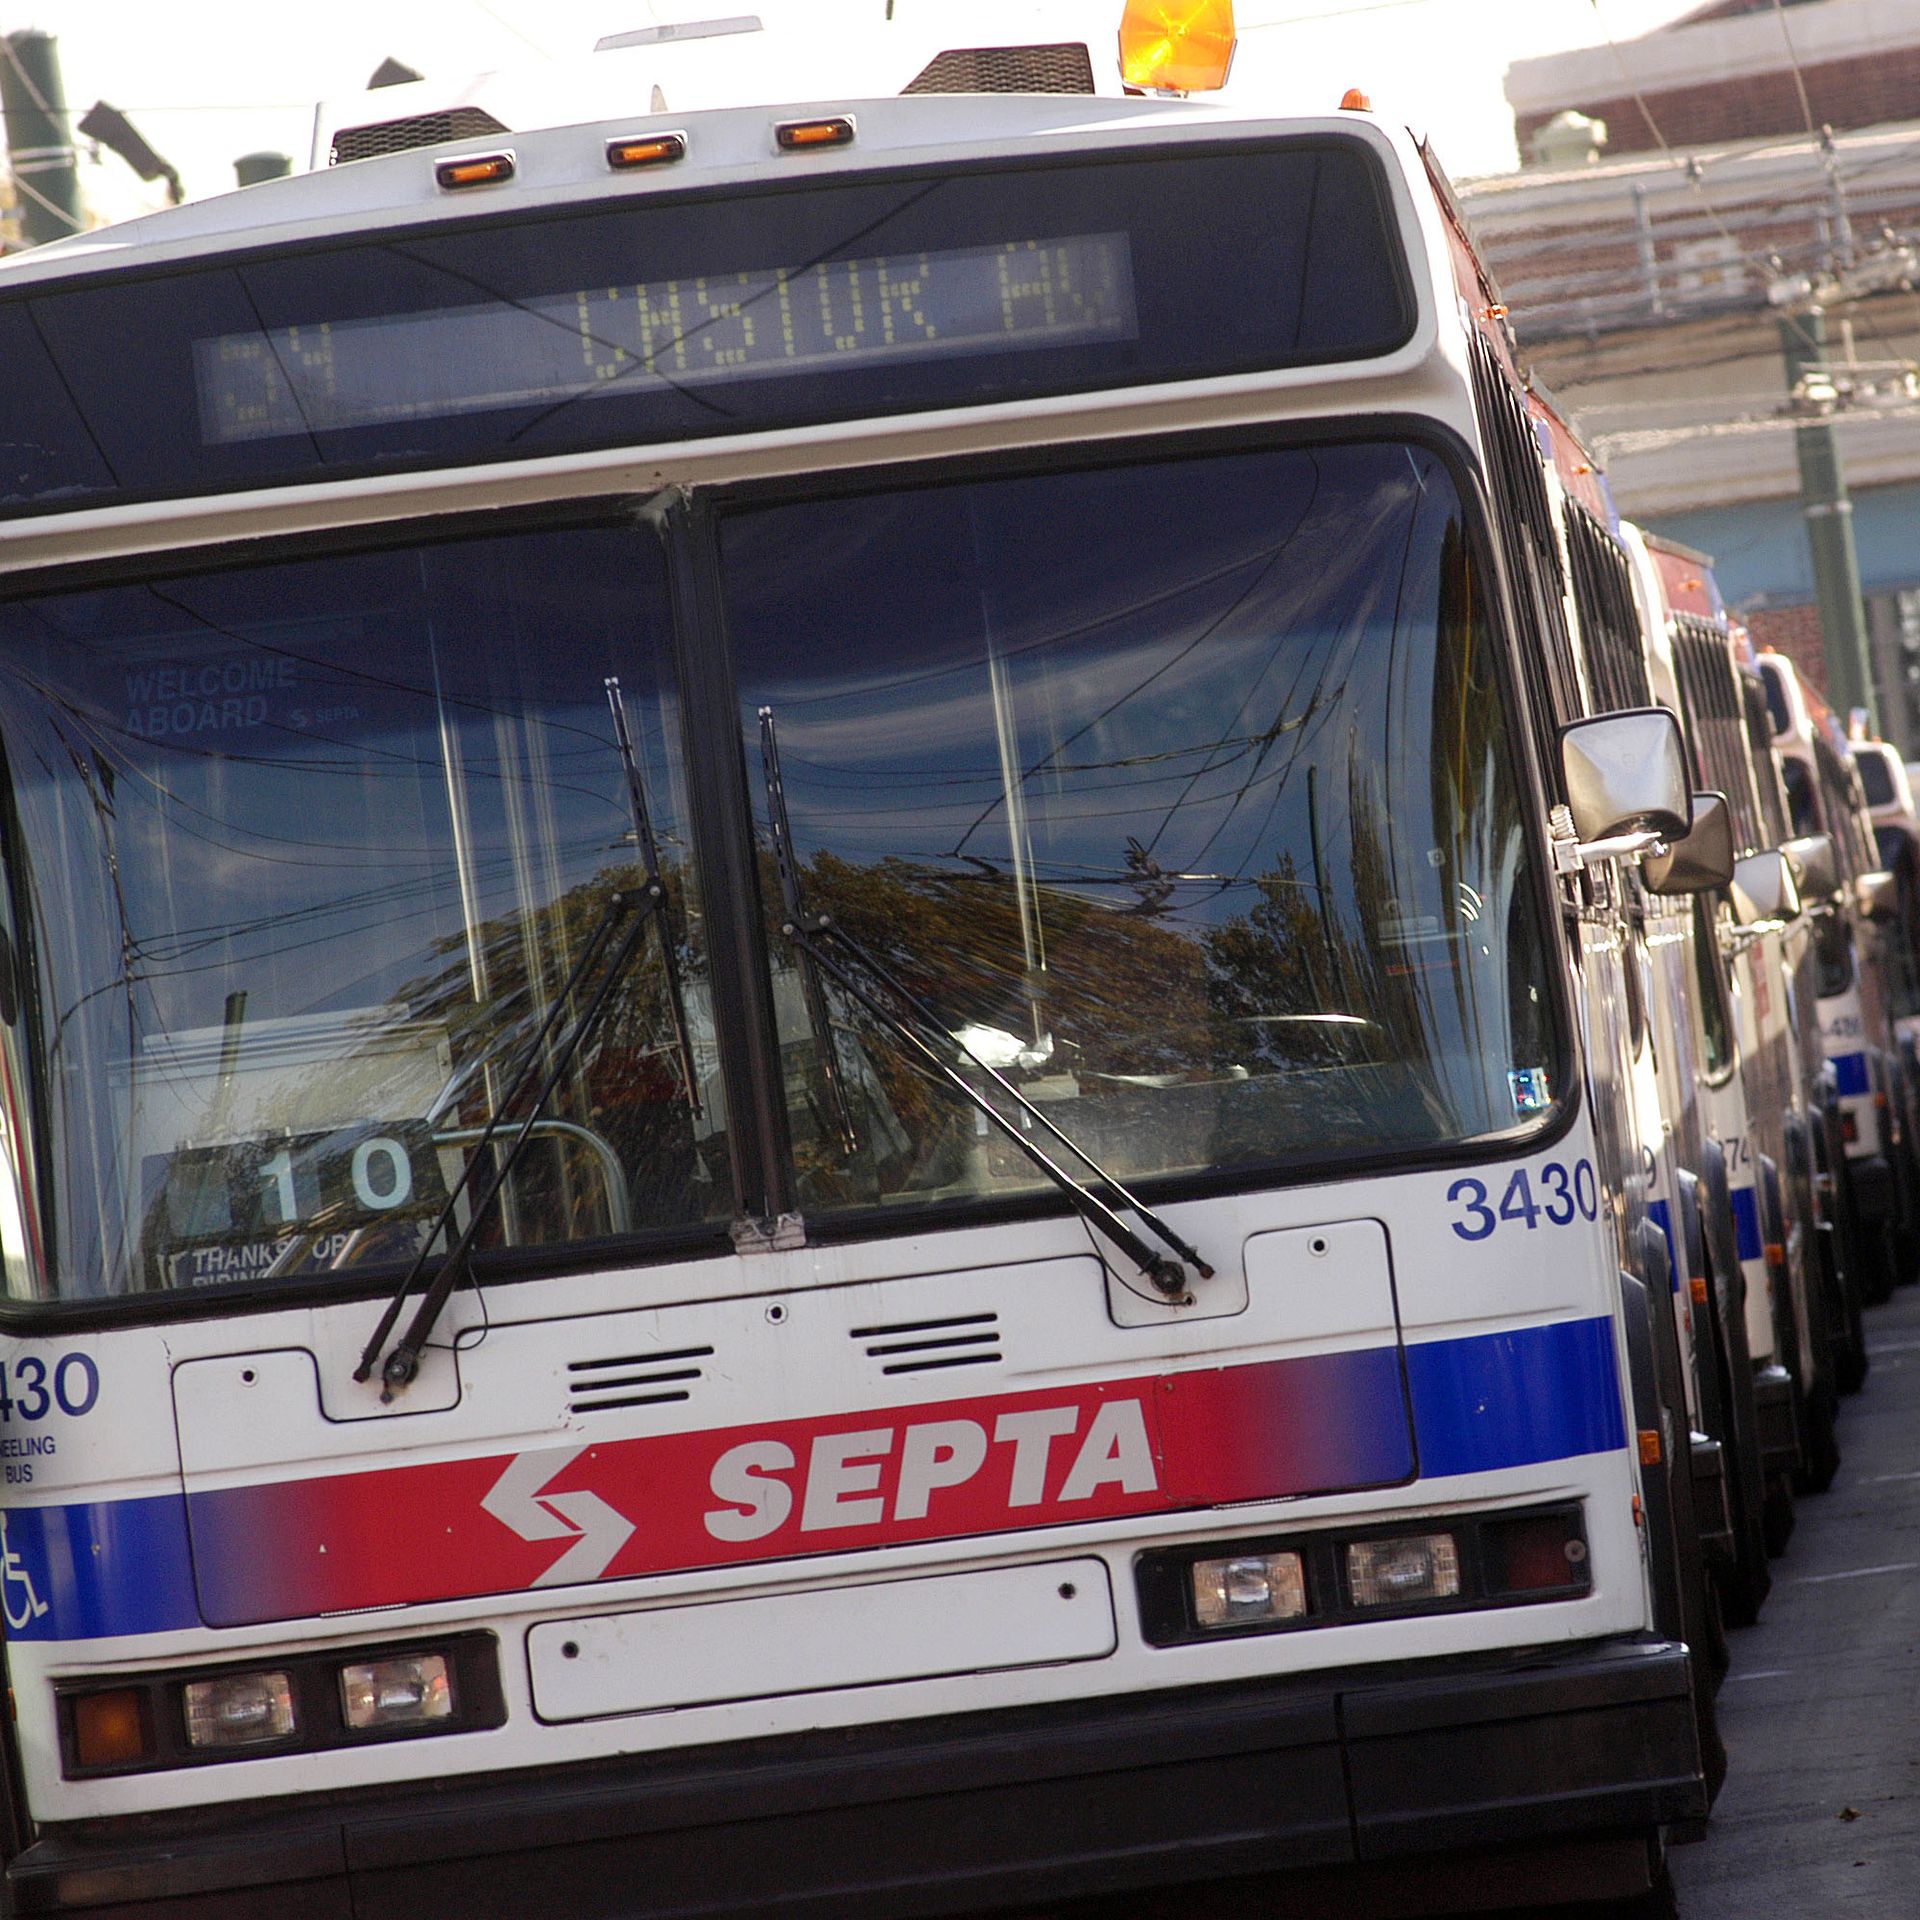 Parked SEPTA buses